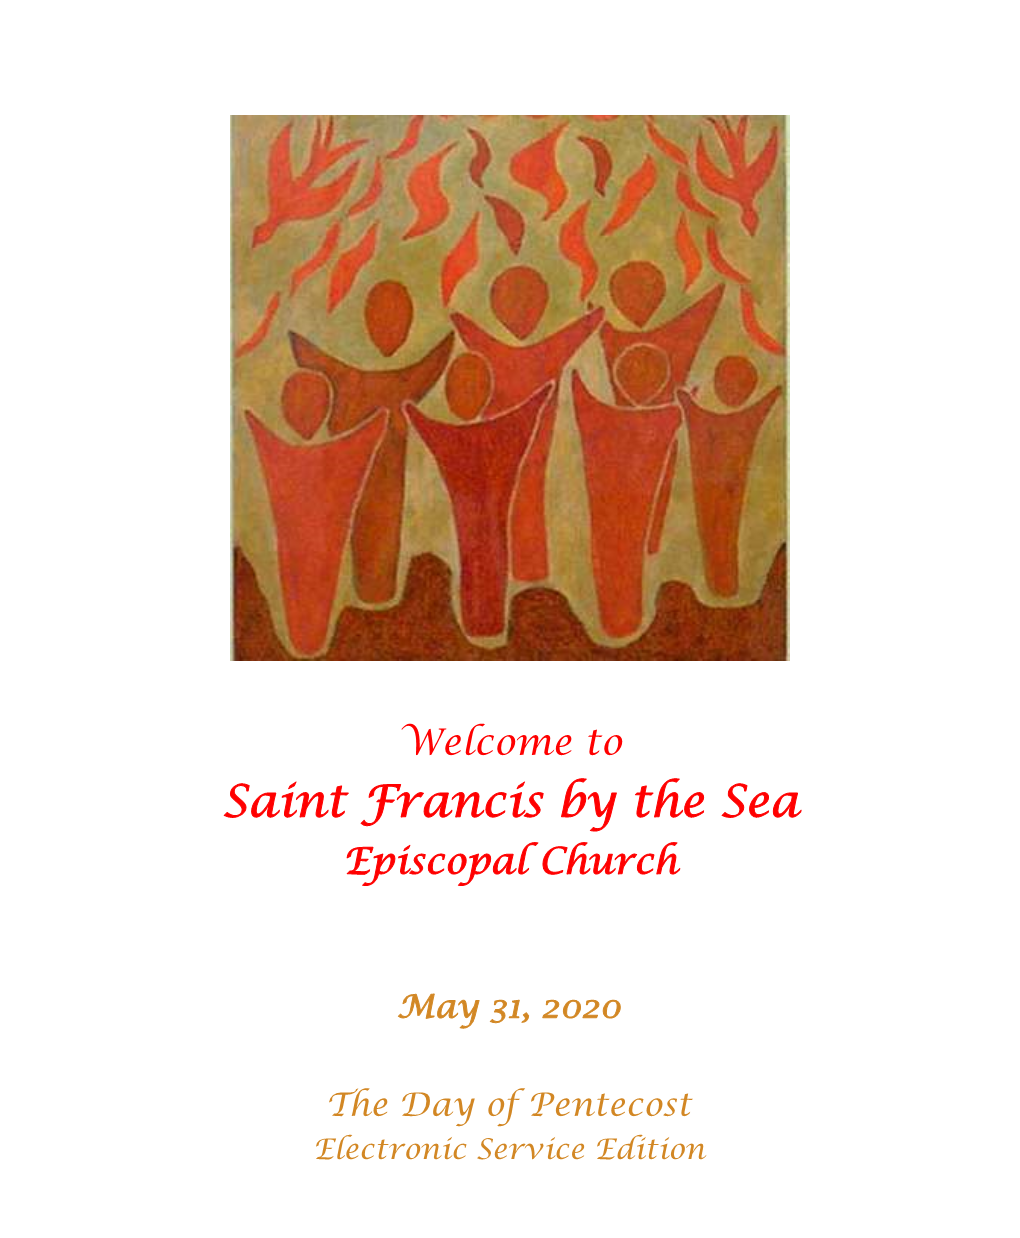 Saint Francis by the Sea Episcopal Church